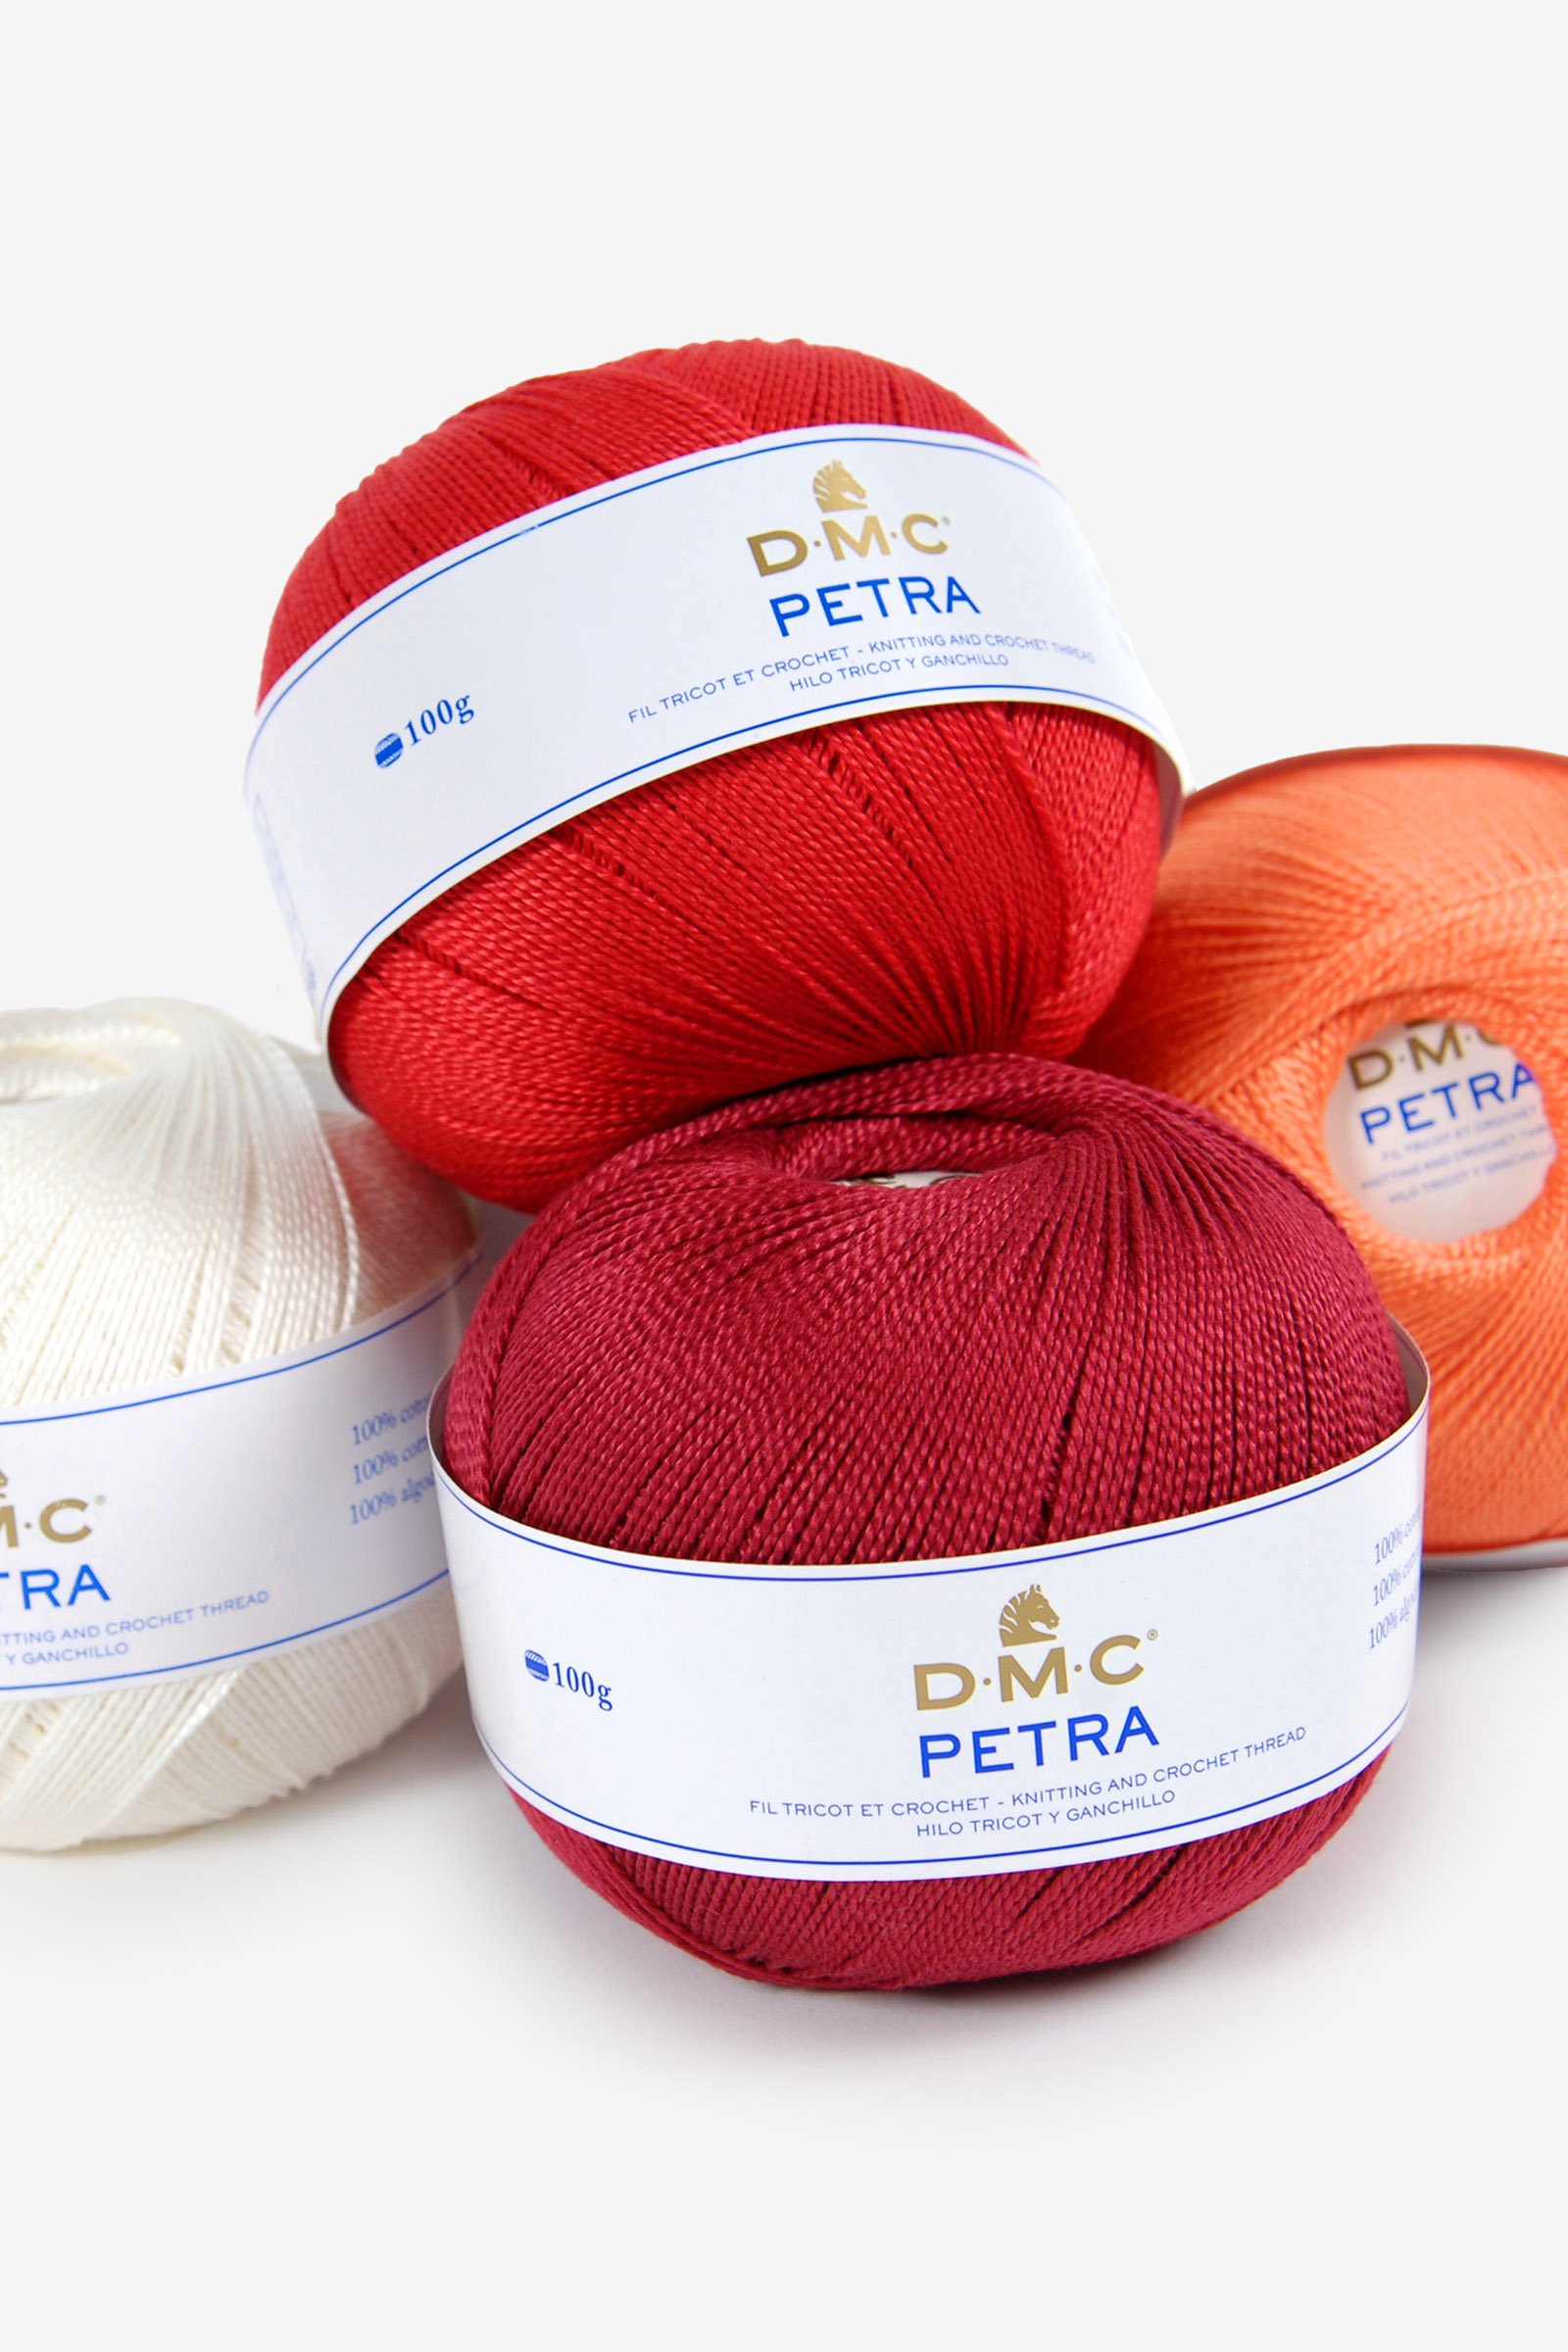 Petra Cotton Thread Size 8 - 100g/875 yds